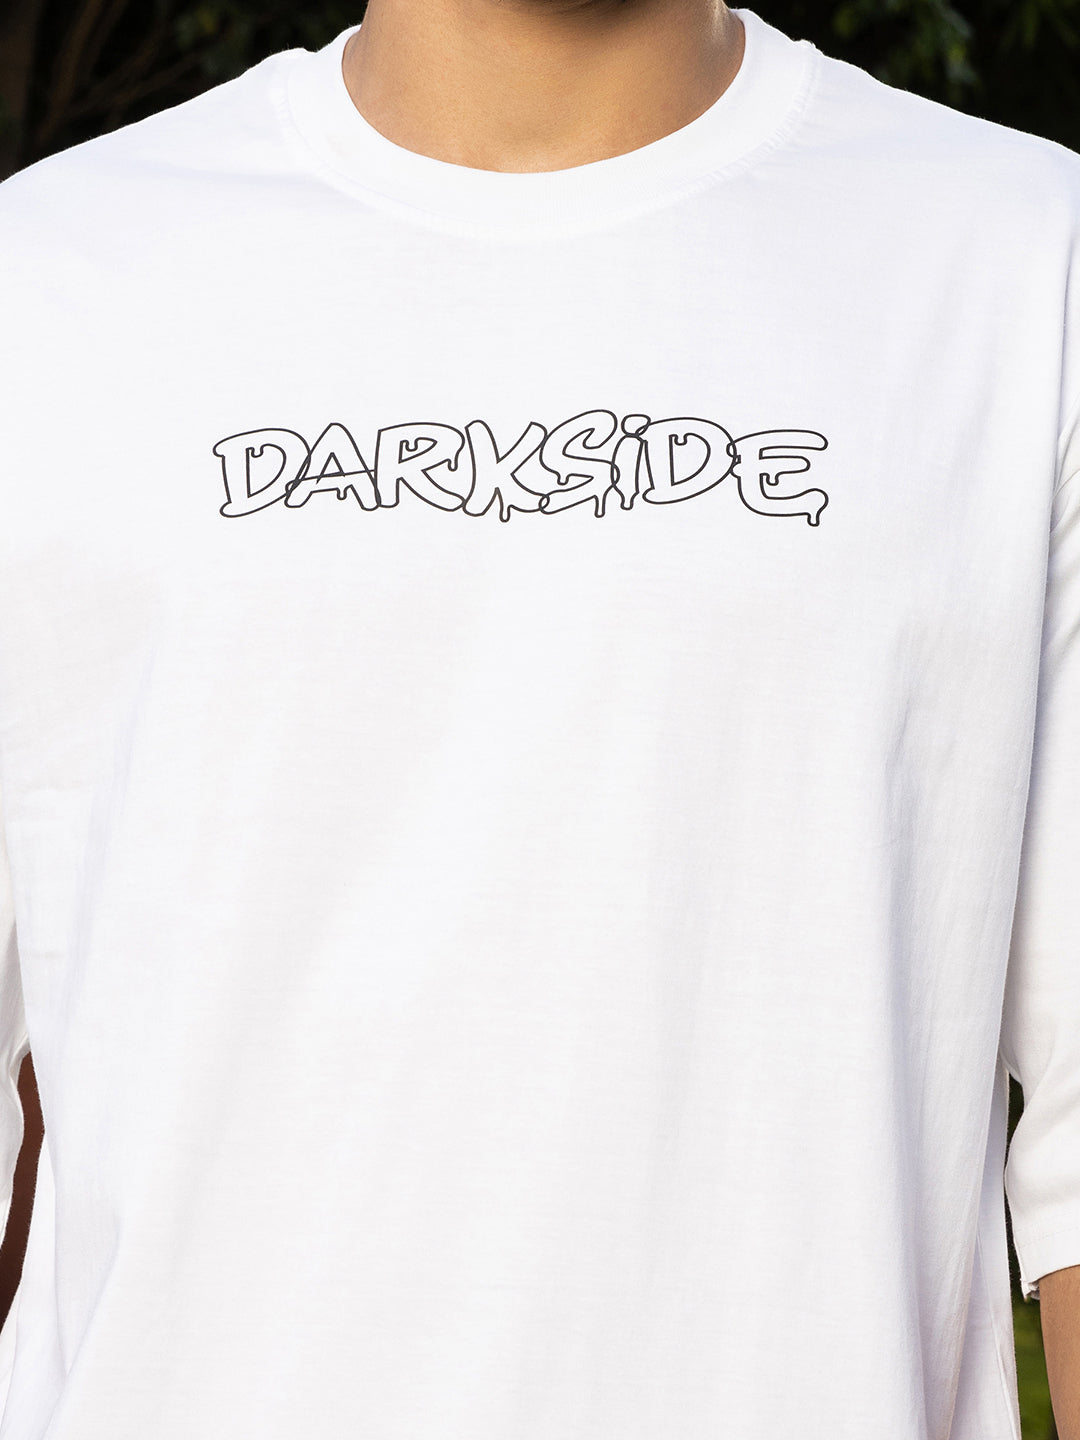 Darkside White Oversized Drop shoulder Tee by Gavin Paris